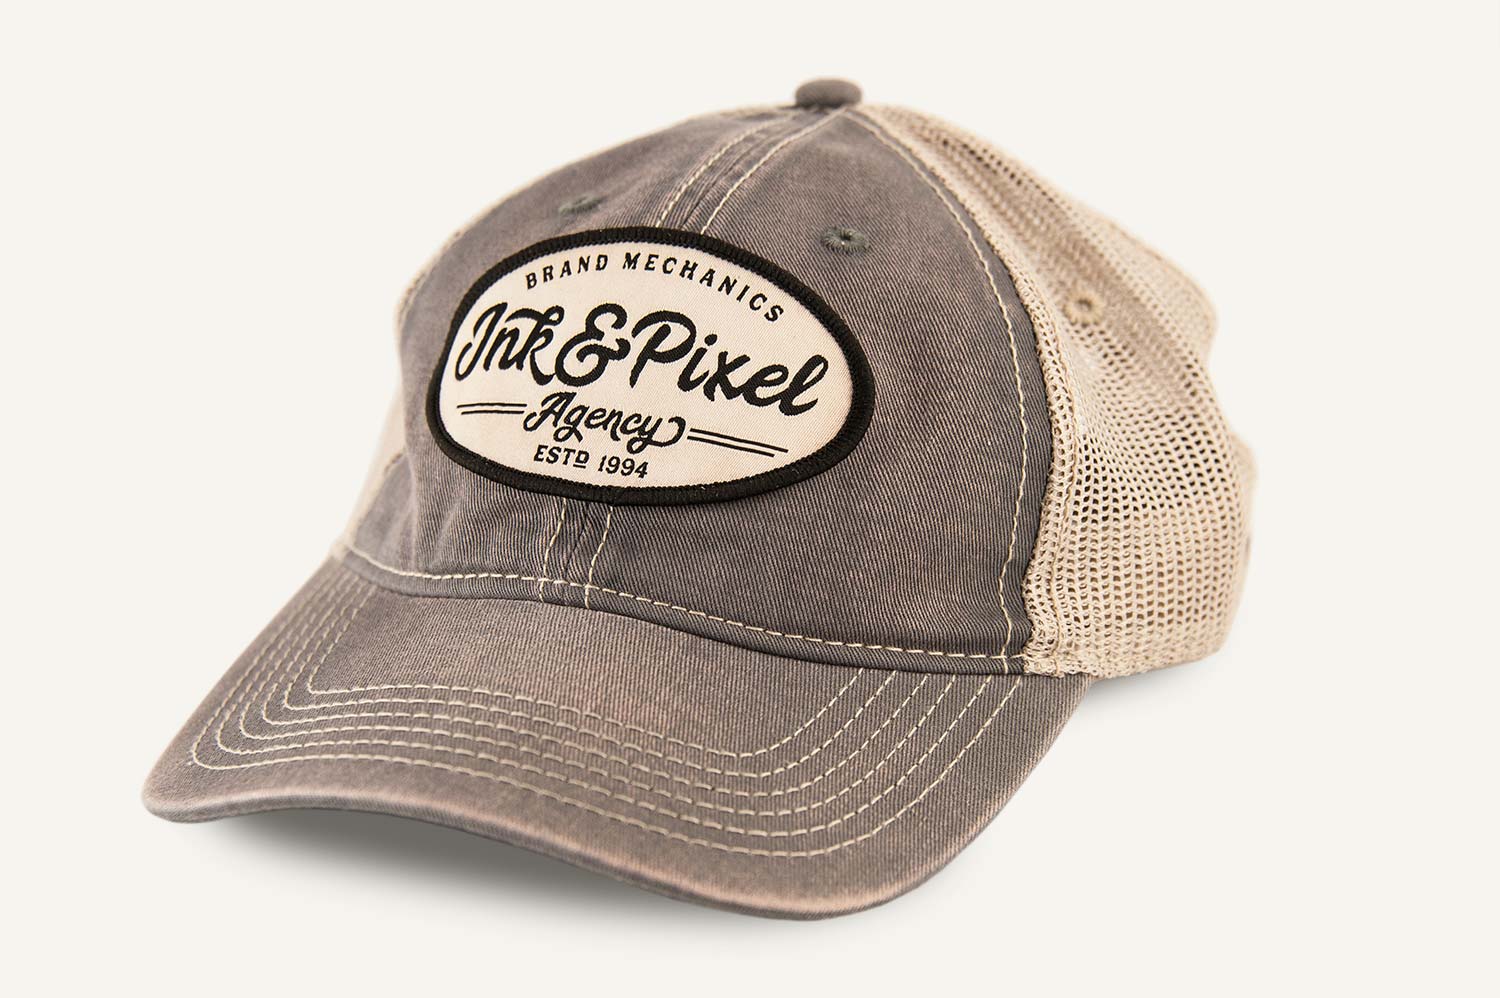 Brand Mechanics Vintage Trucker Hat